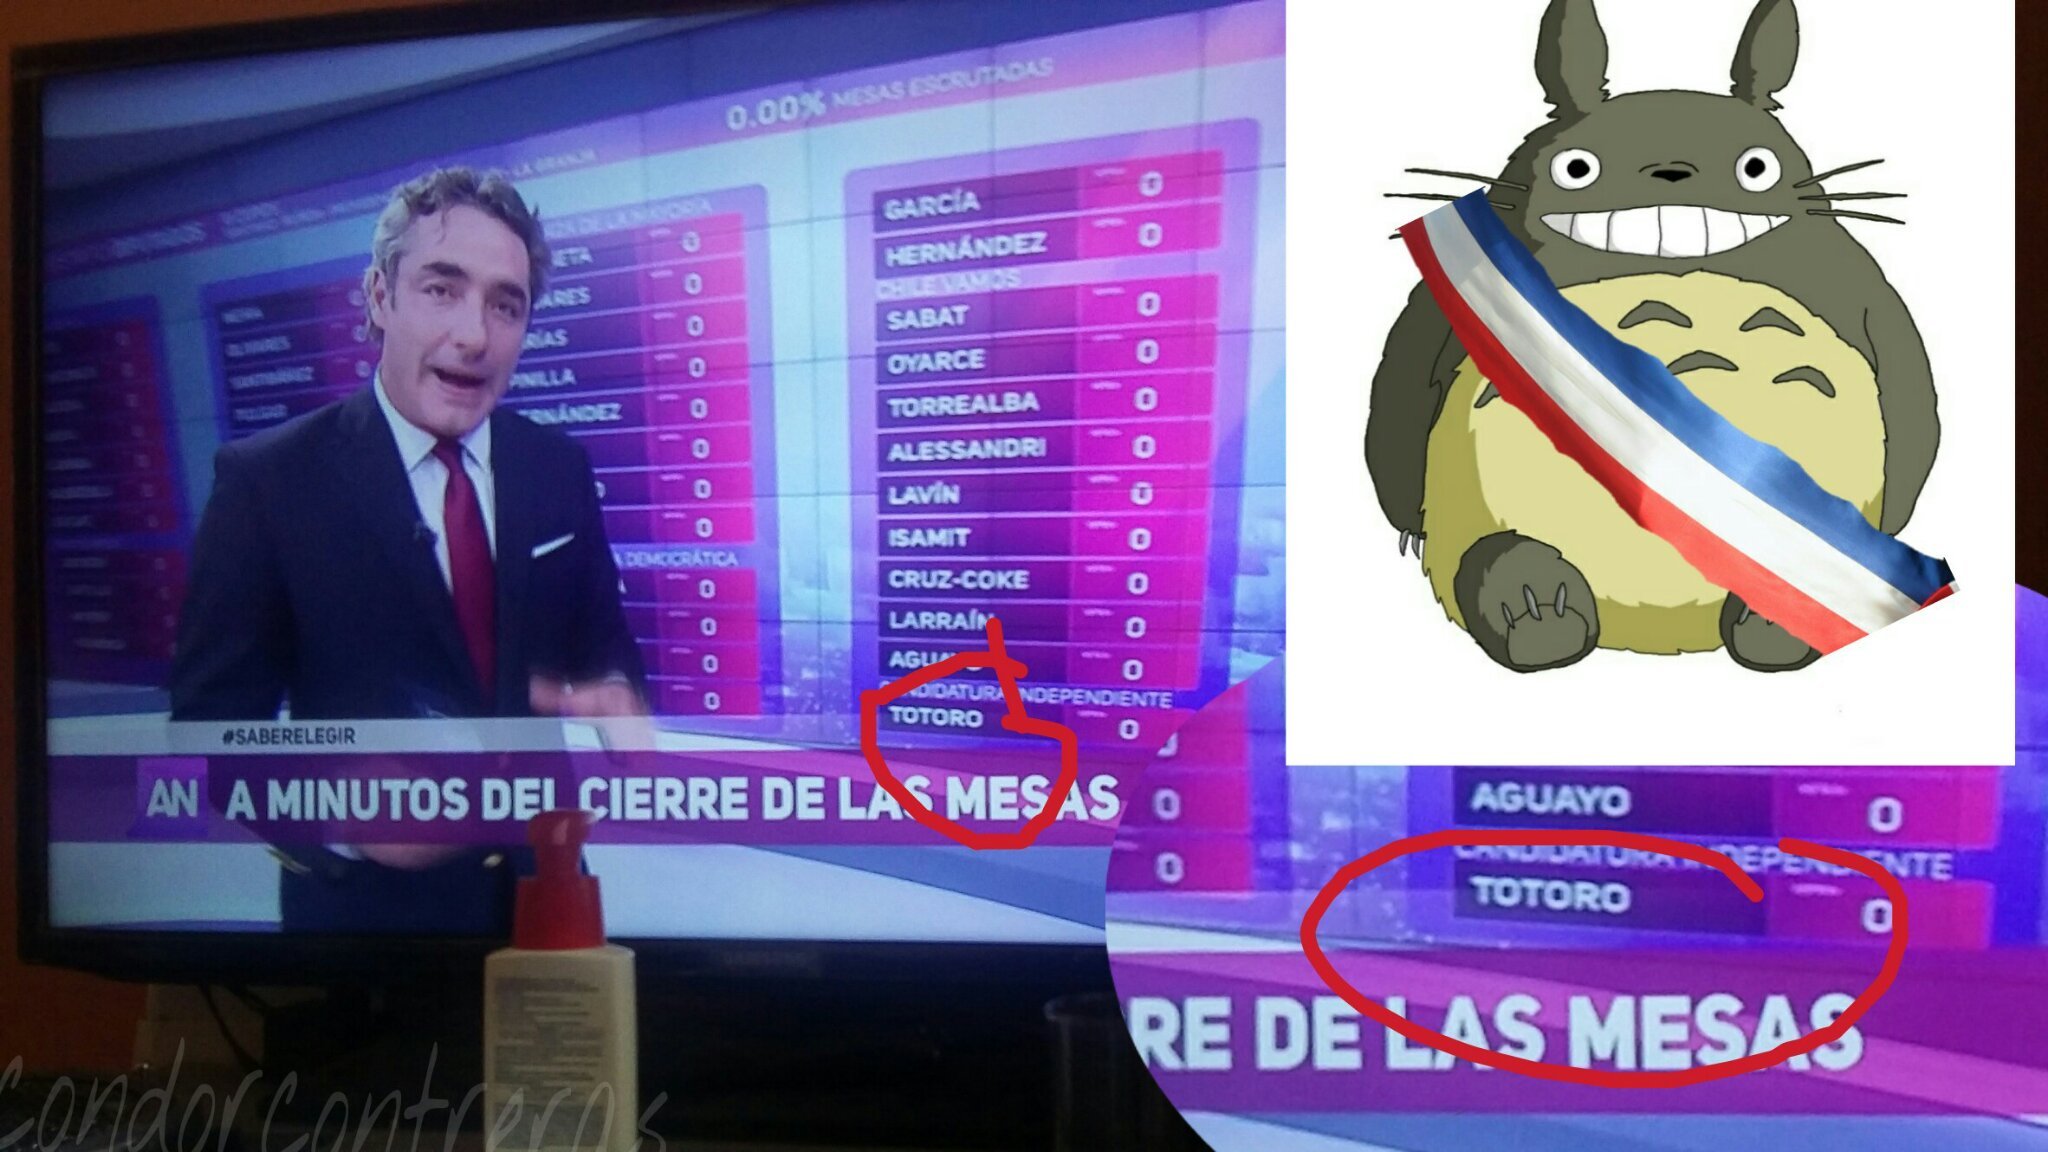 Totoro for diputado. - meme